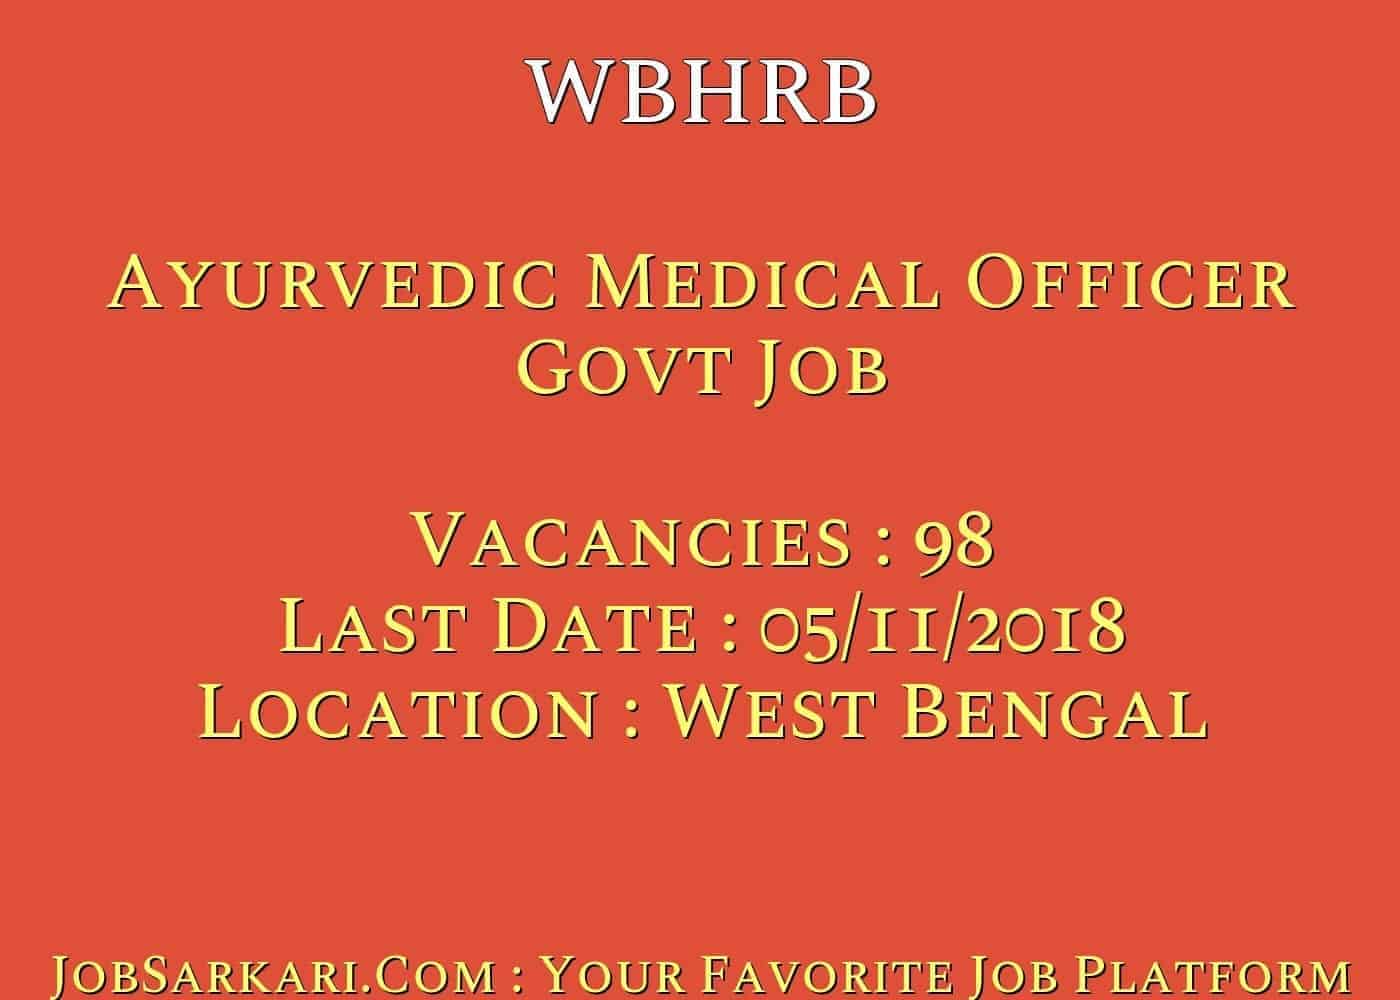 WBHRB Recruitment 2018 for Ayurvedic Medical Officer Govt Job